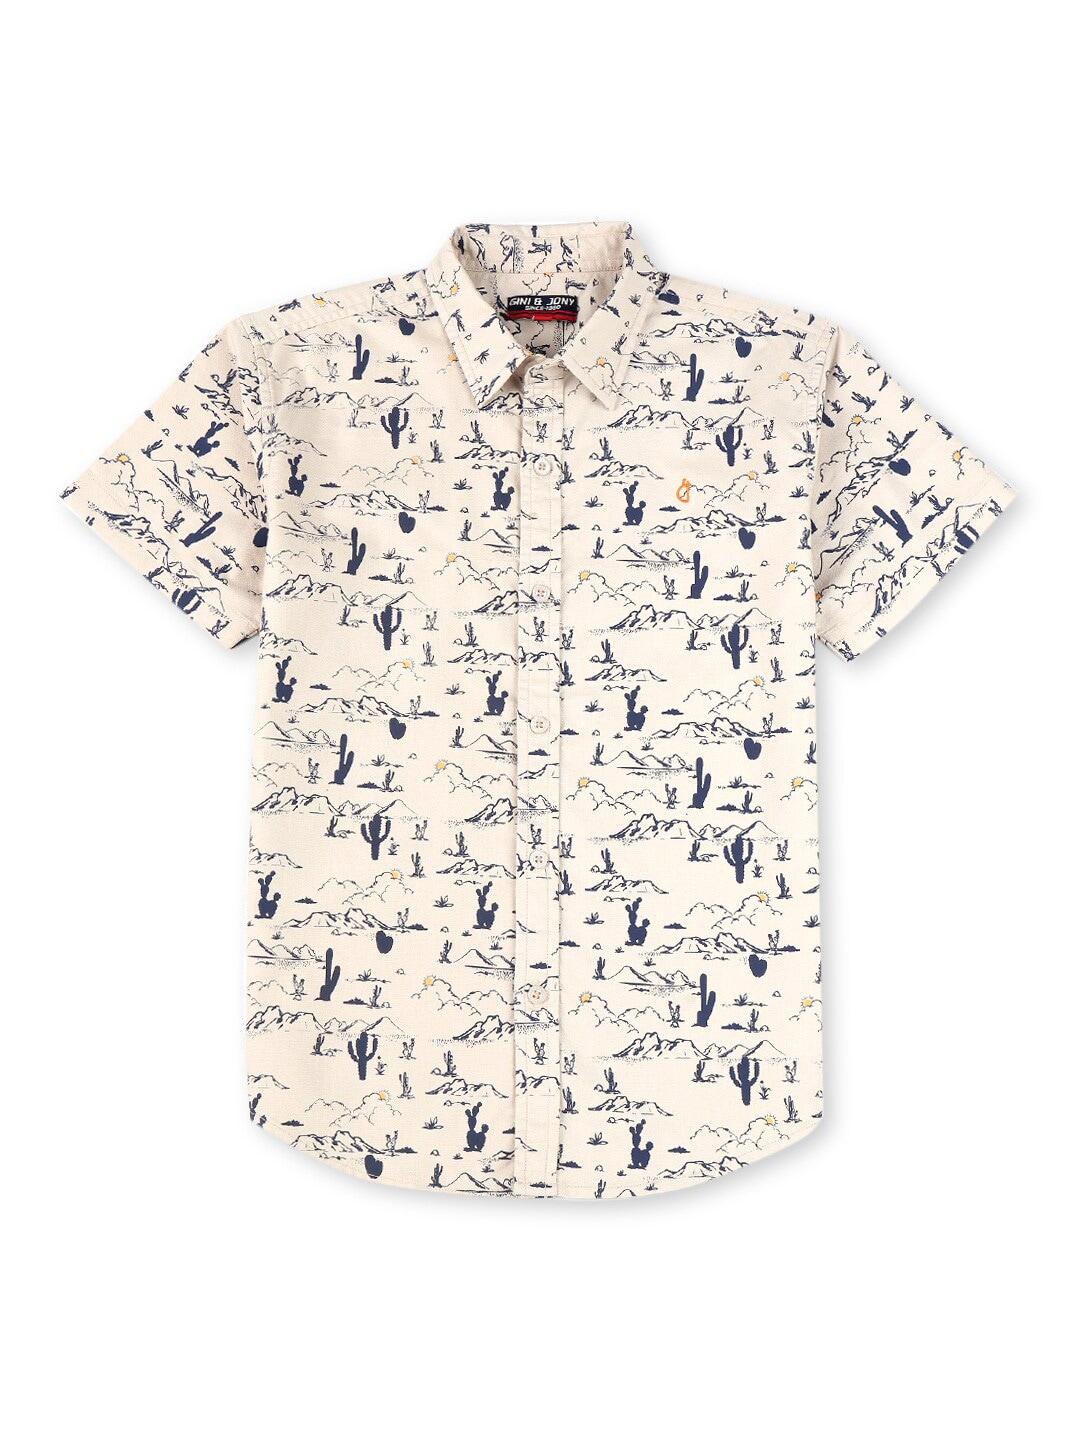 palm-tree-boys-conversational-printed-cotton-casual-shirt